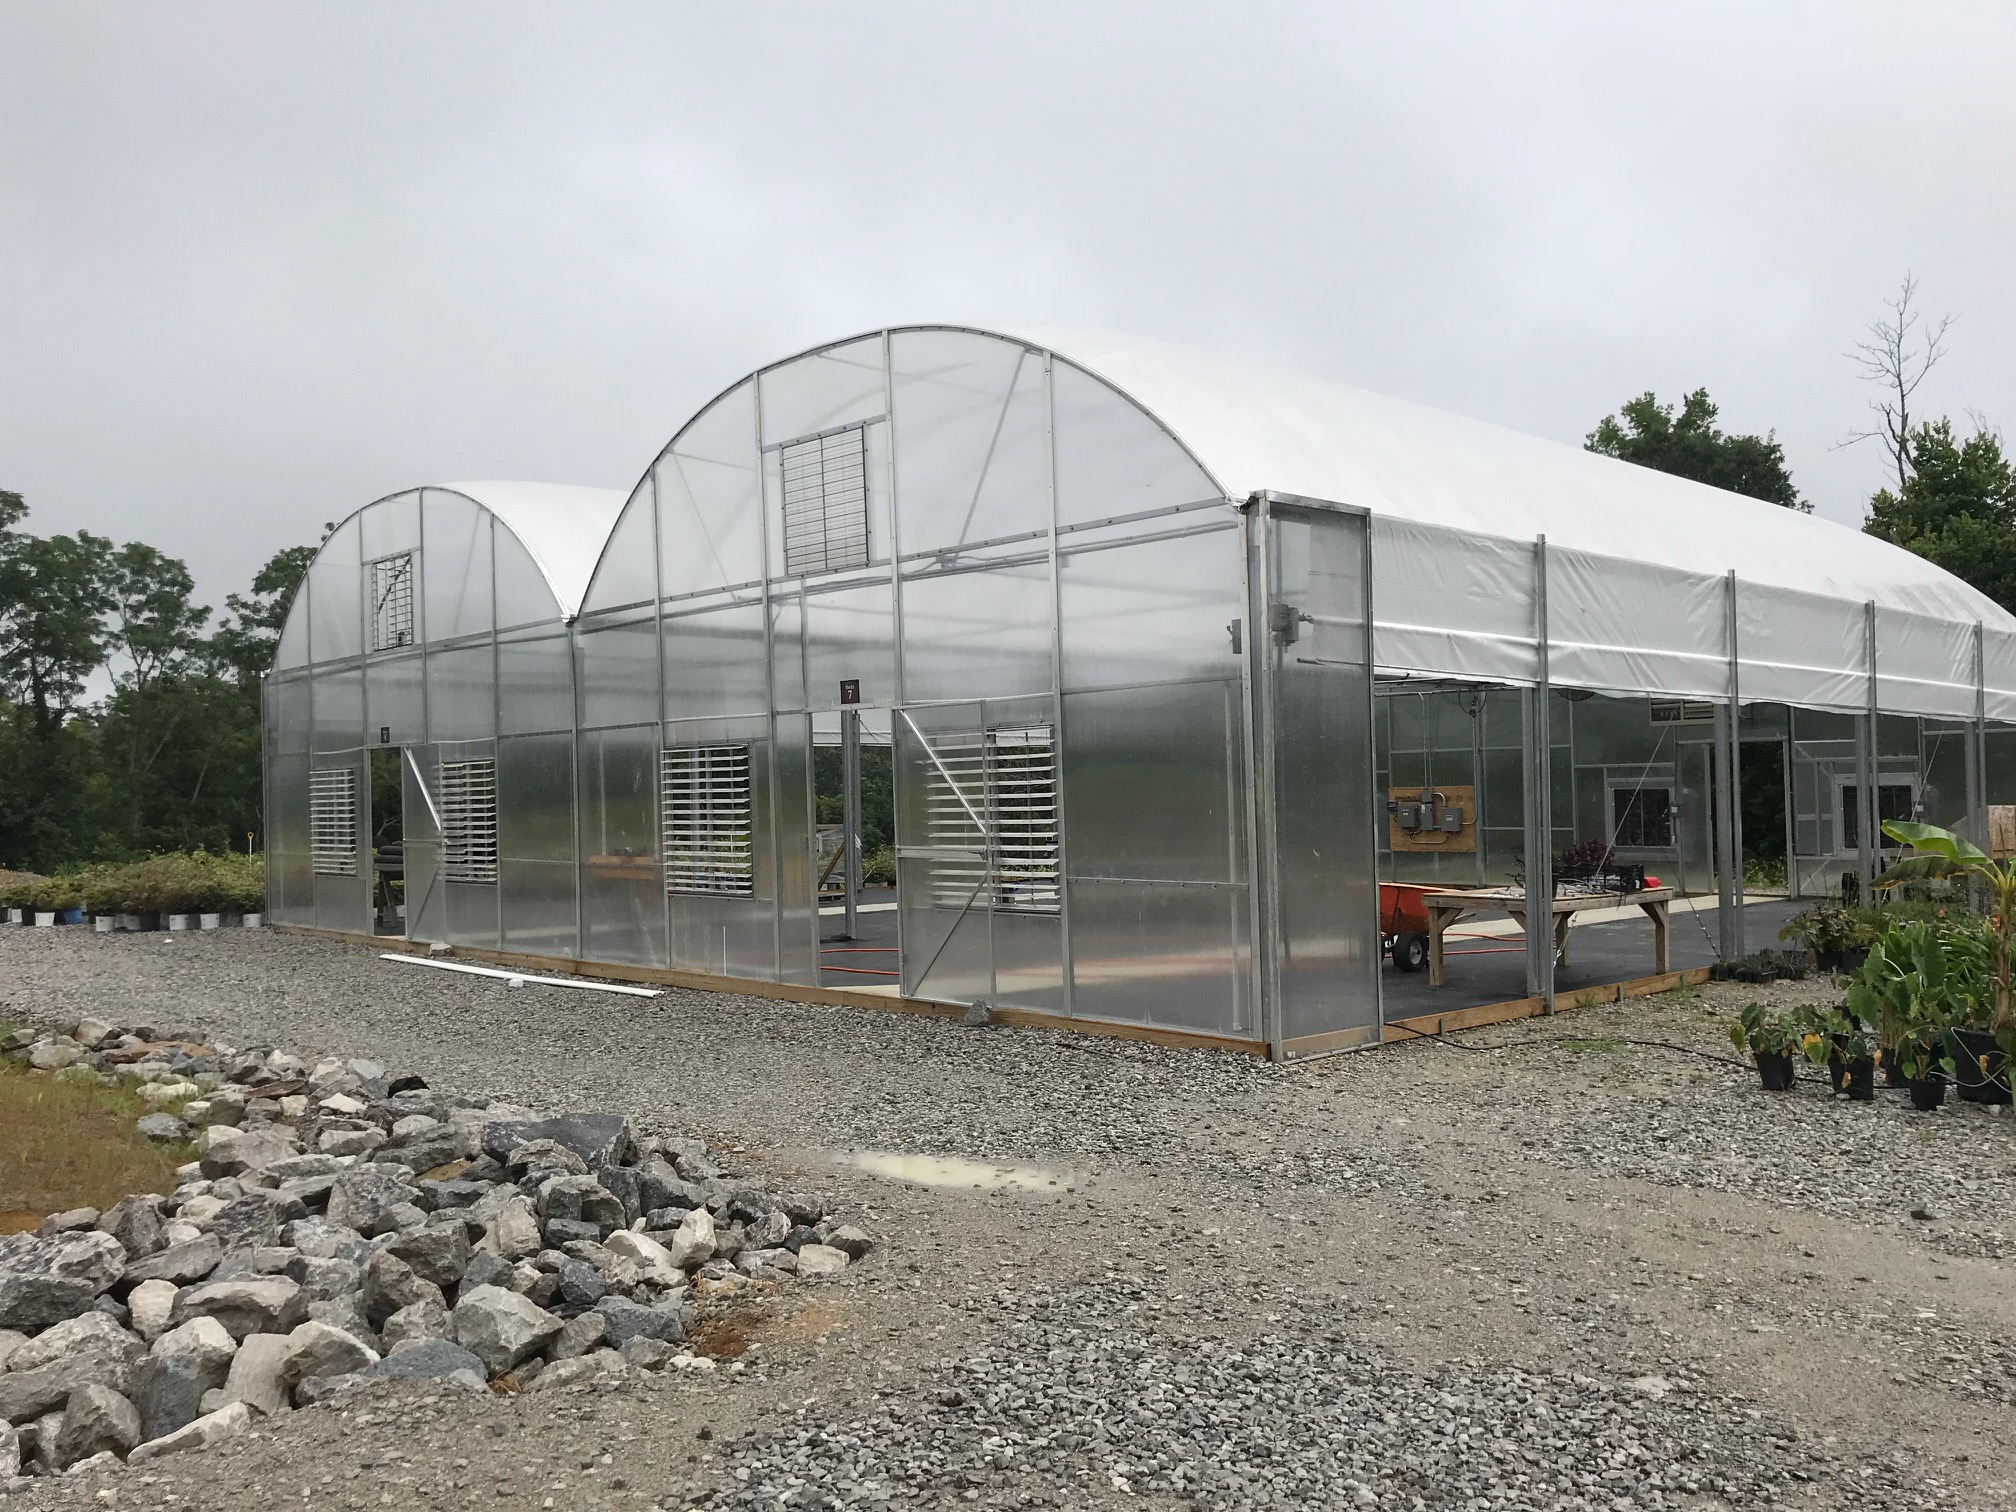 Greenhouses at Ark Encounter